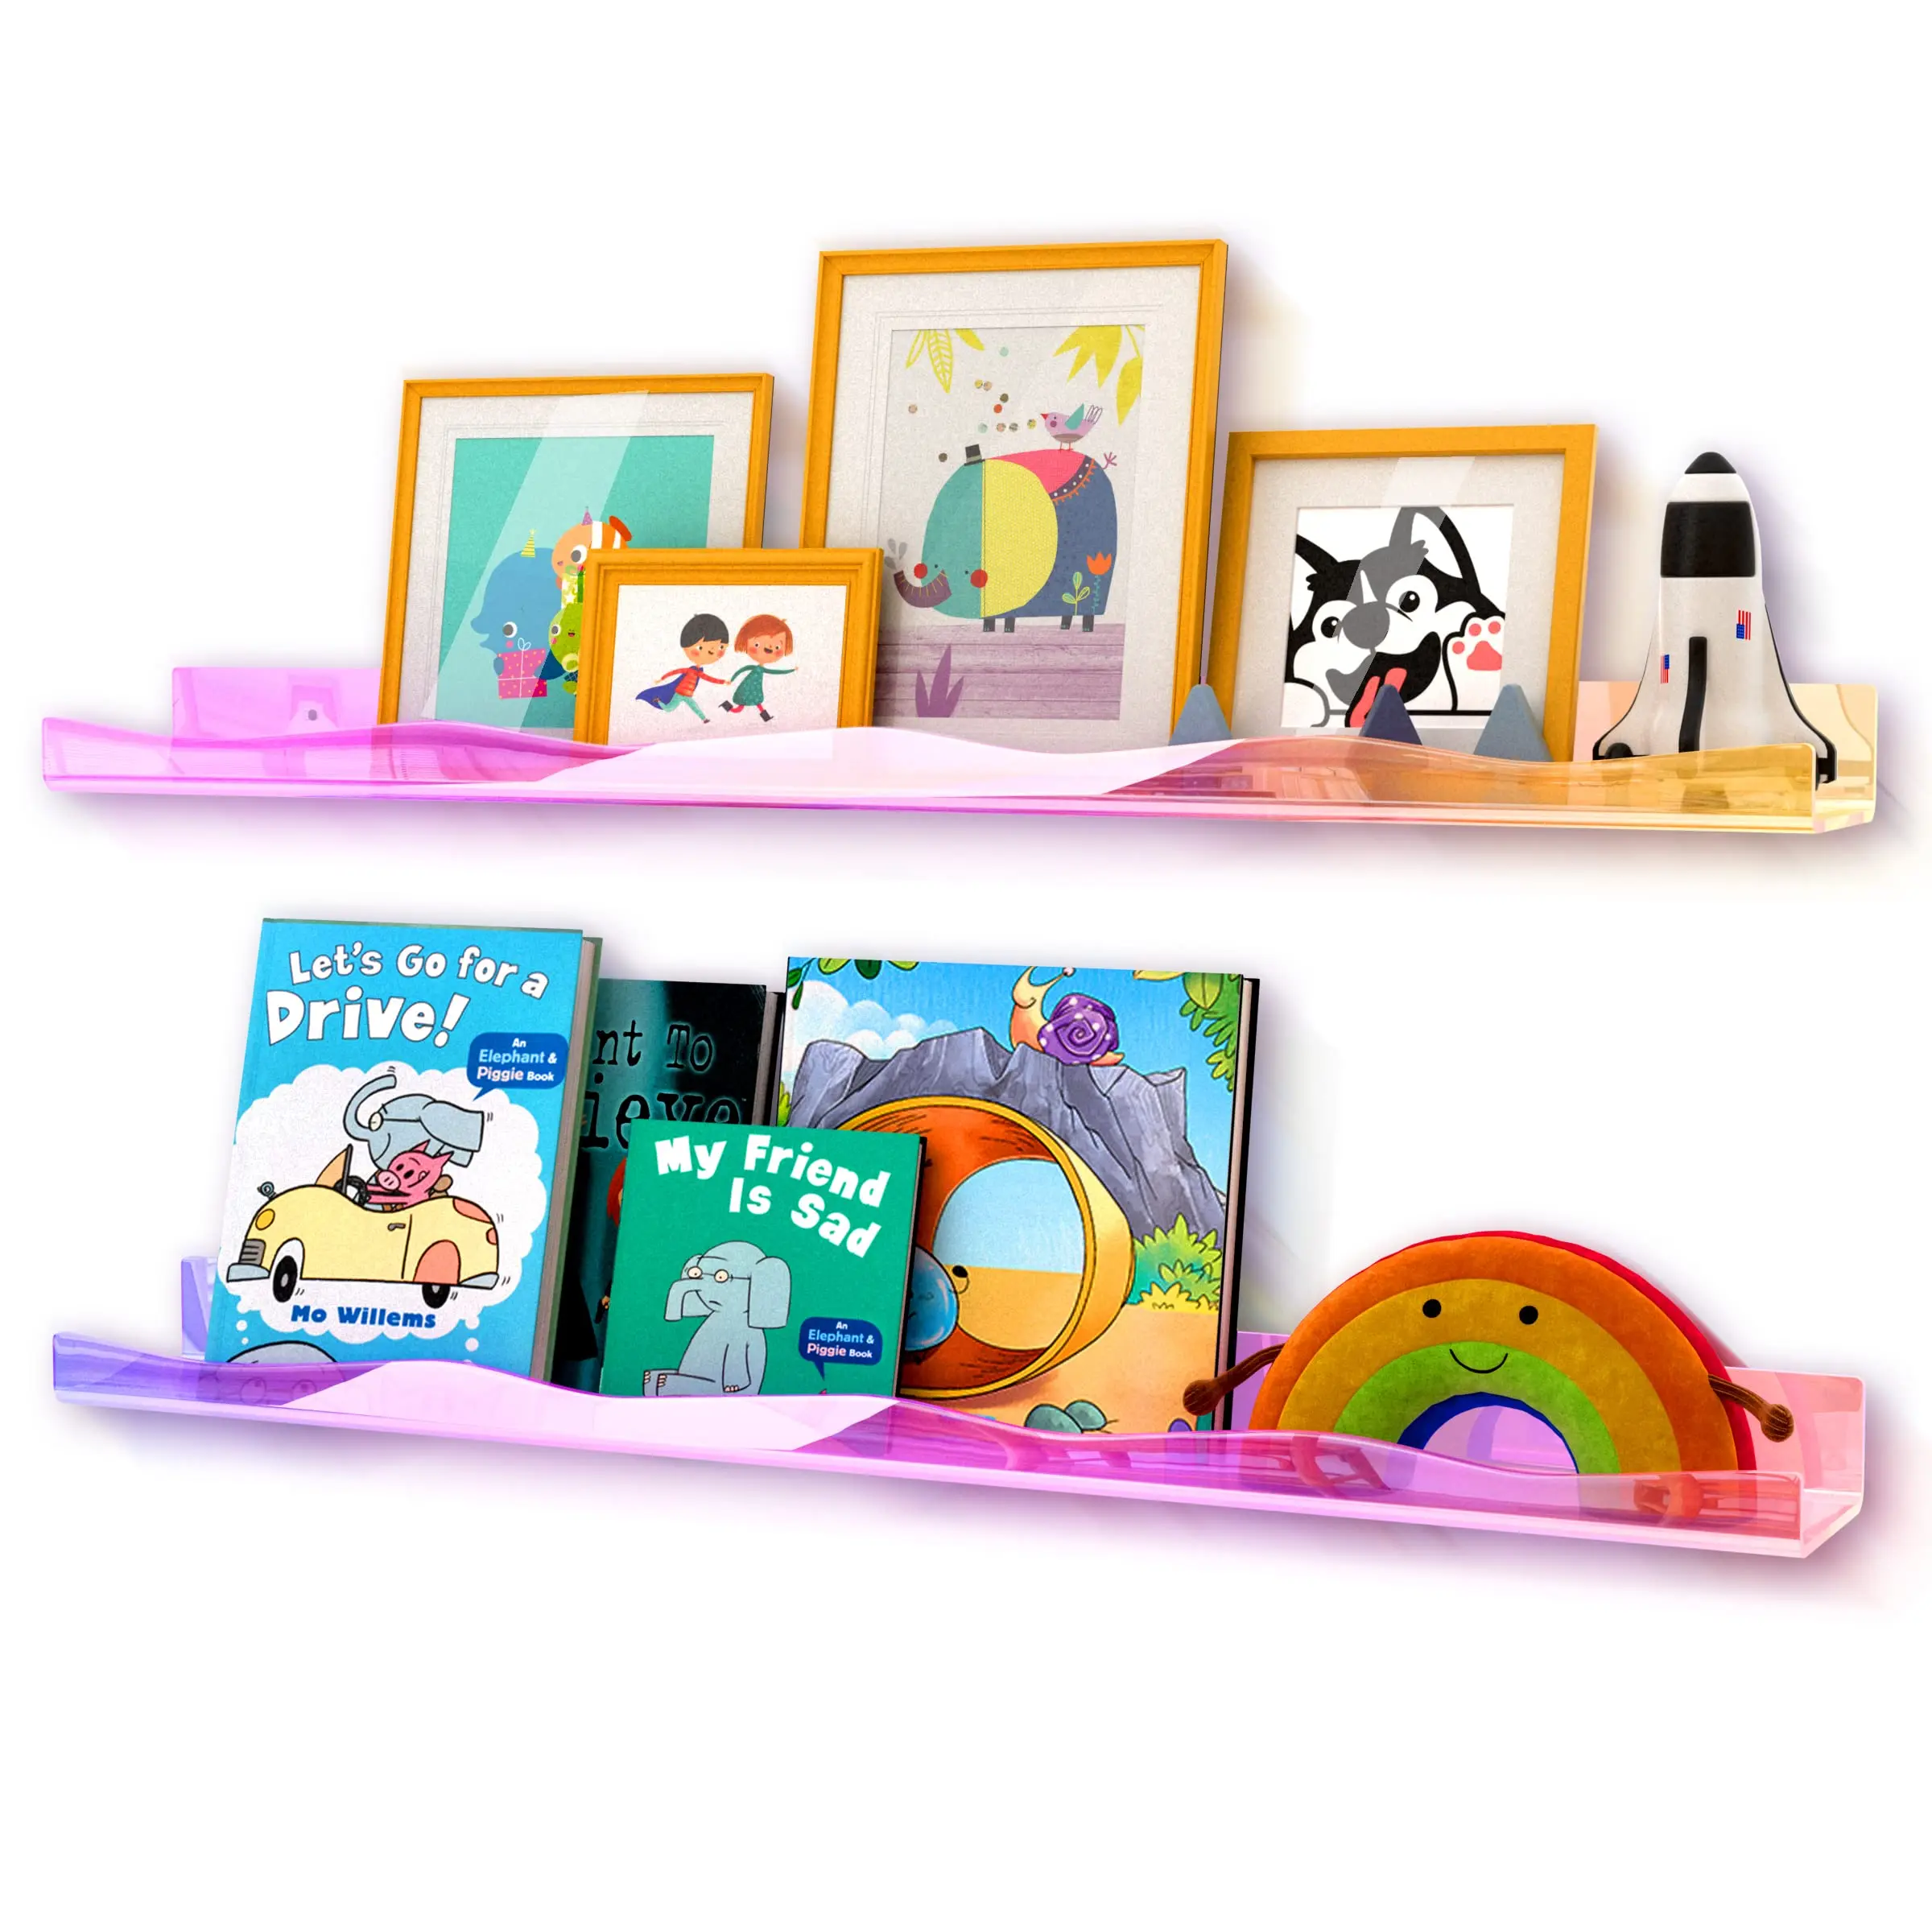 

Iridescent Acrylic Wall Mounted Floating Shelf,Room Wall Display Bookshelf,Bathroom Storage Ledge Shelves Toy Display Organizer